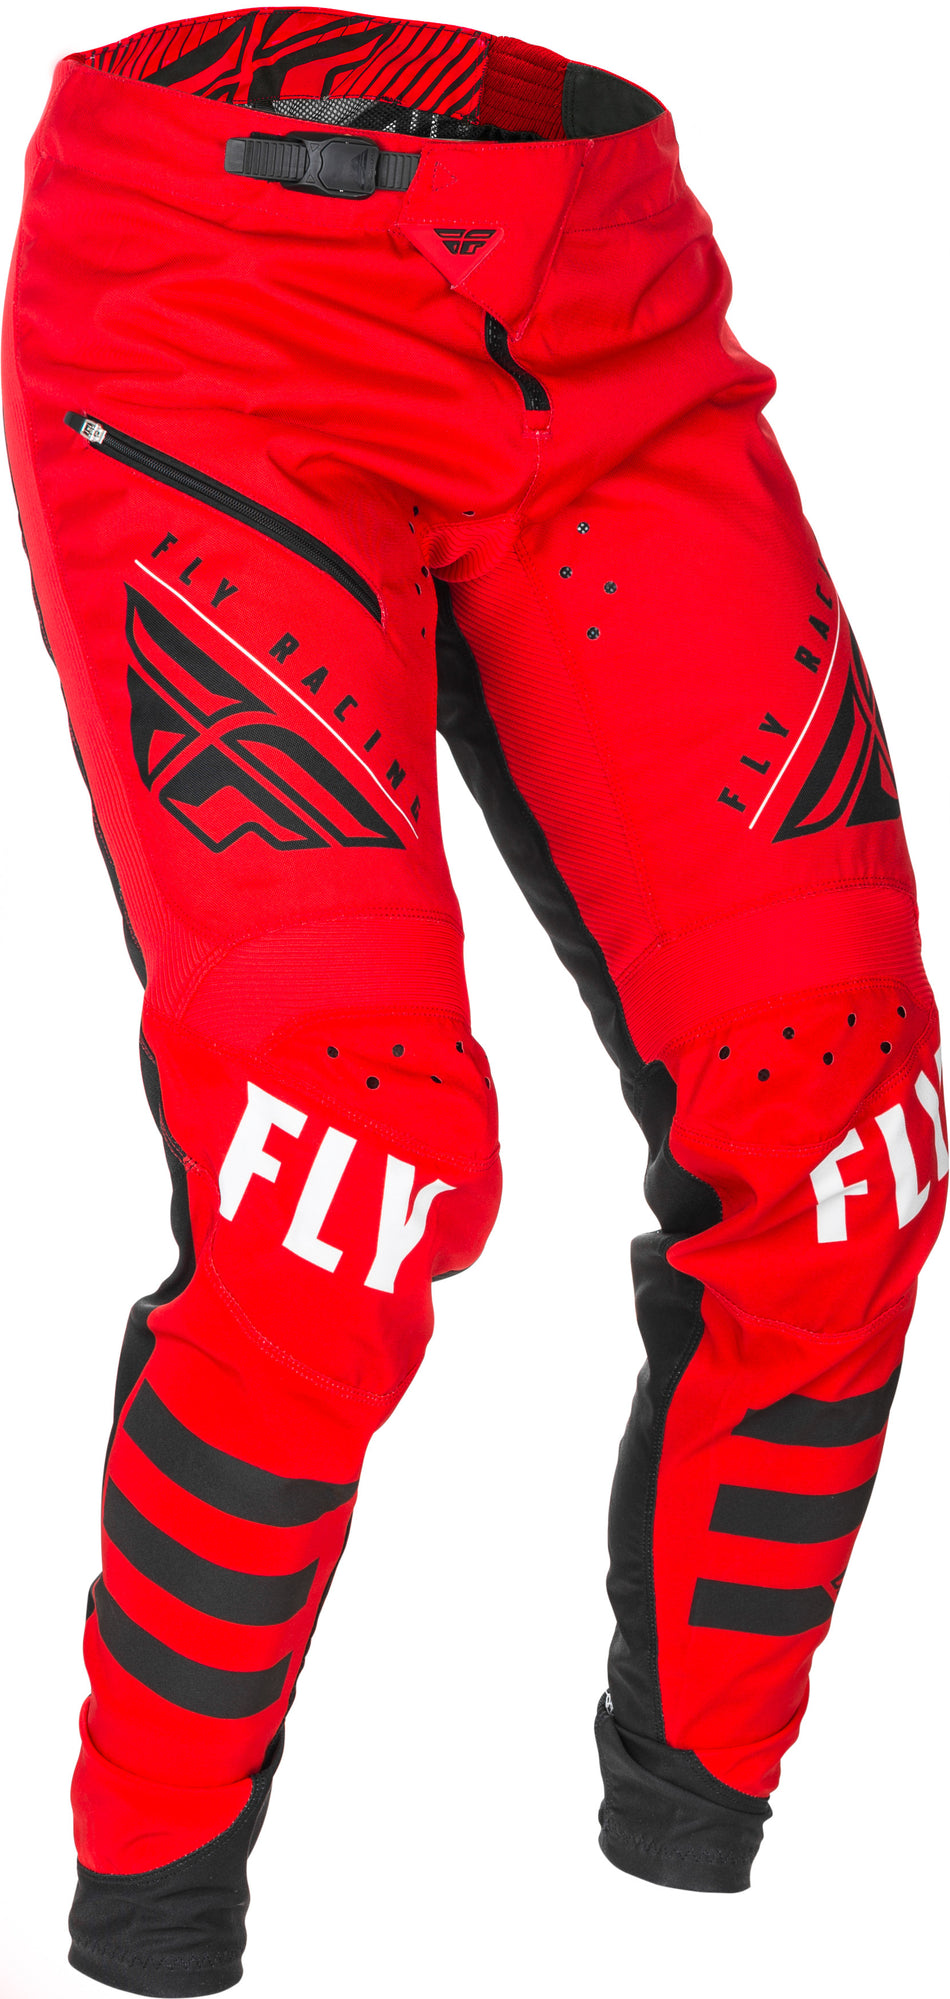 FLY RACING Kinetic Bicycle Pants Red/Black Sz 20 373-04220